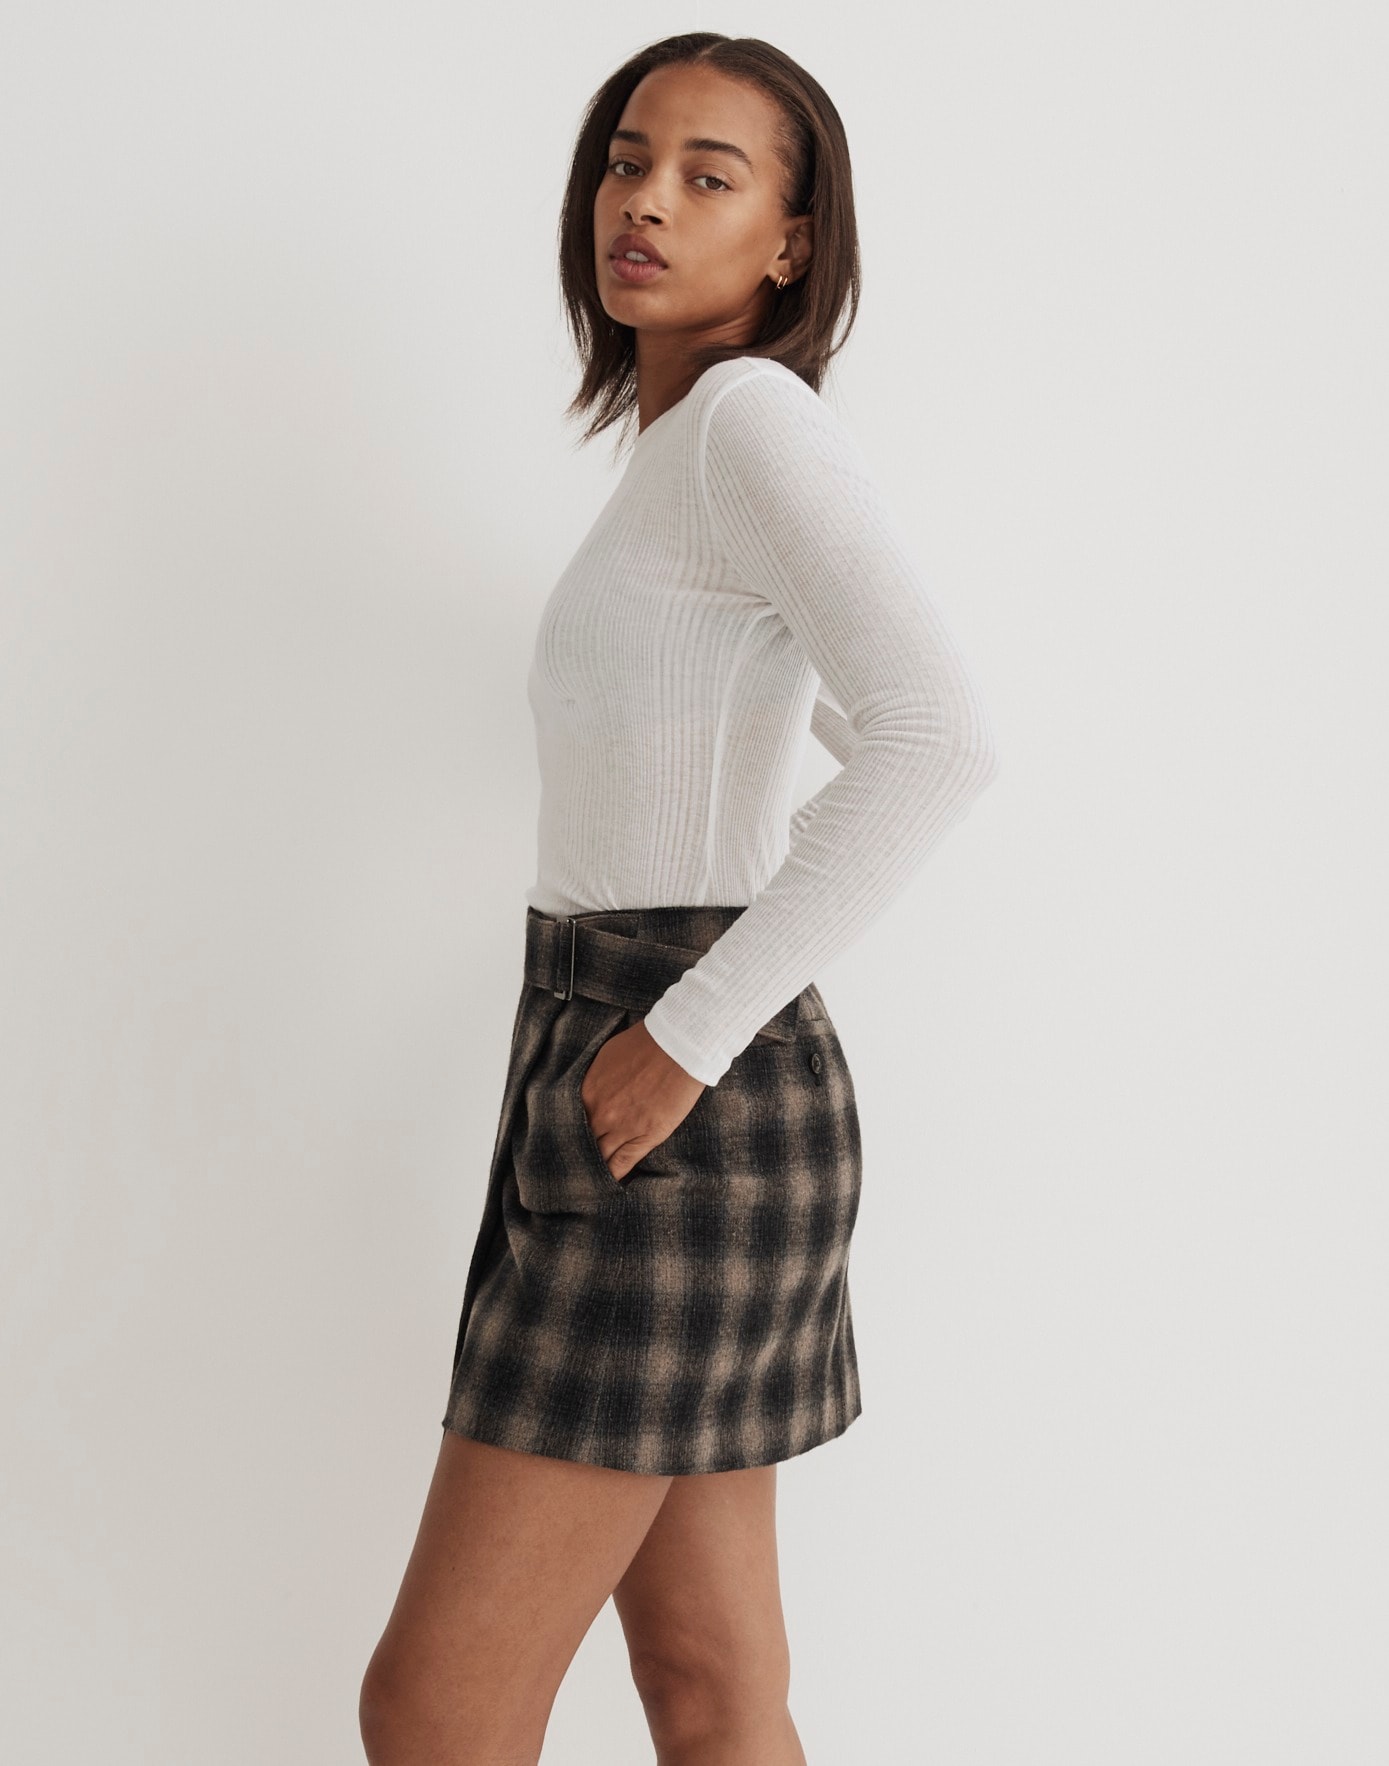 Buckle-Belt Wrap Mini Skirt in Plaid